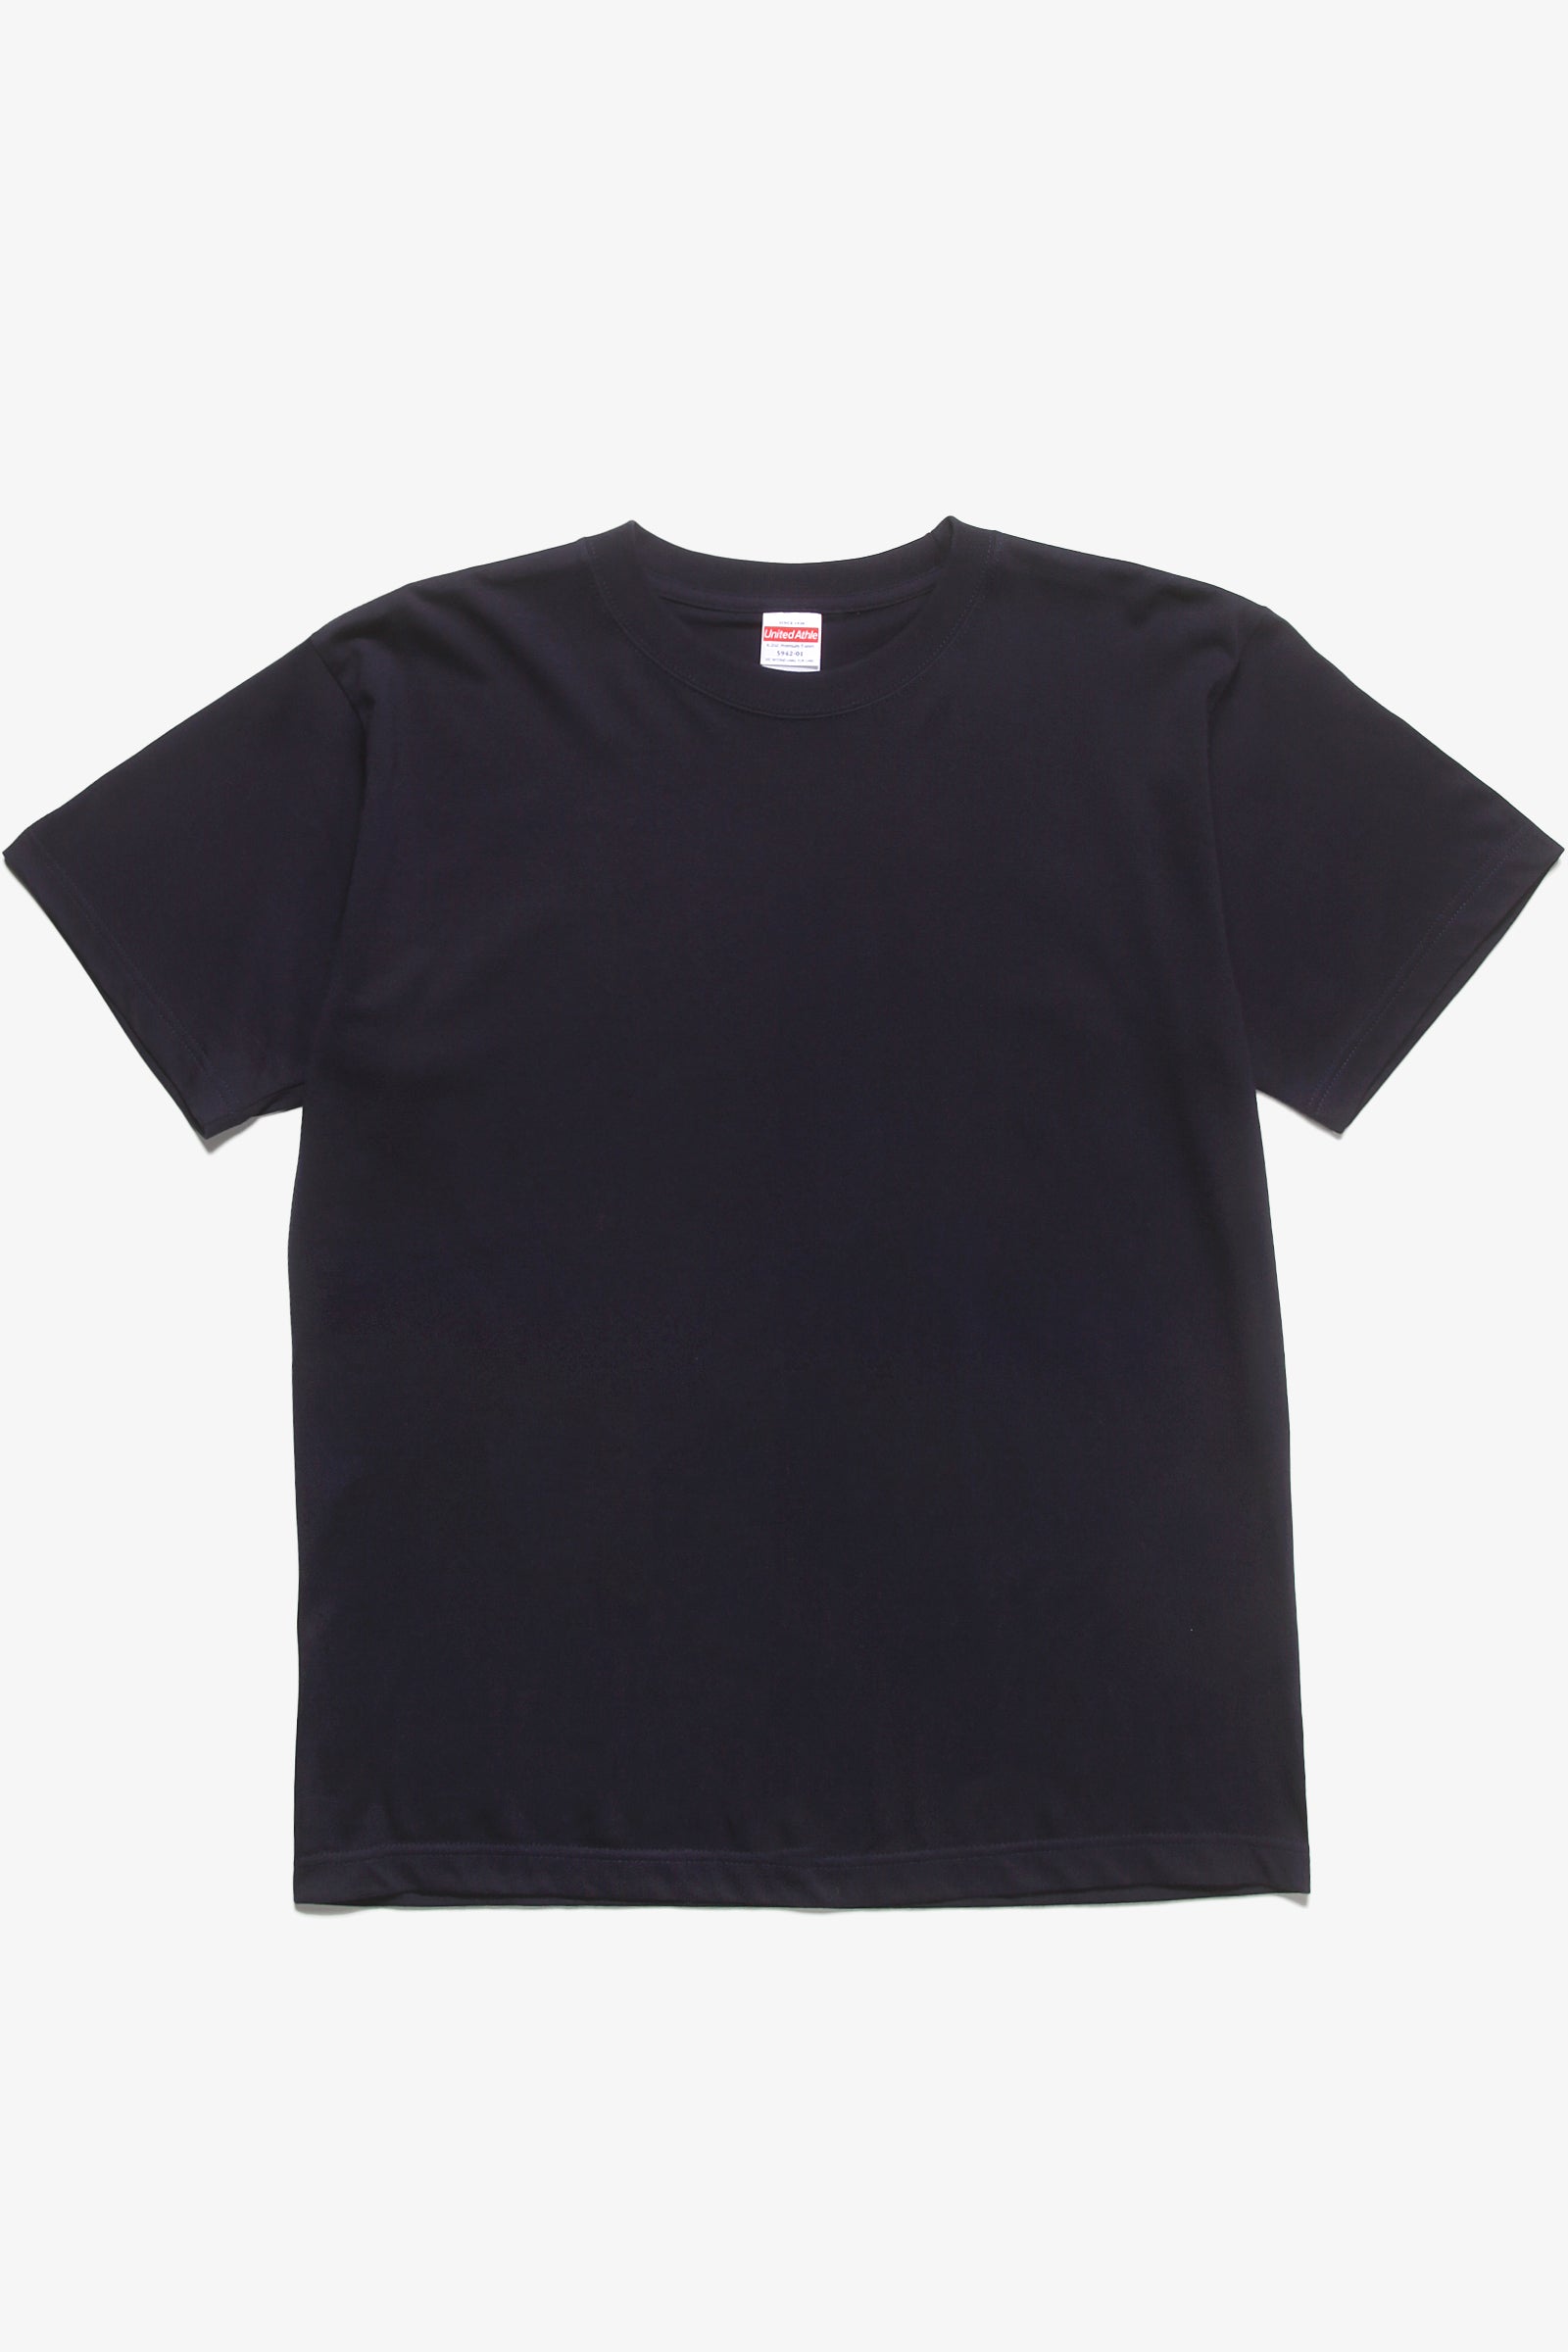 United Athle - 5942 6.2oz Premium T-Shirt - Navy